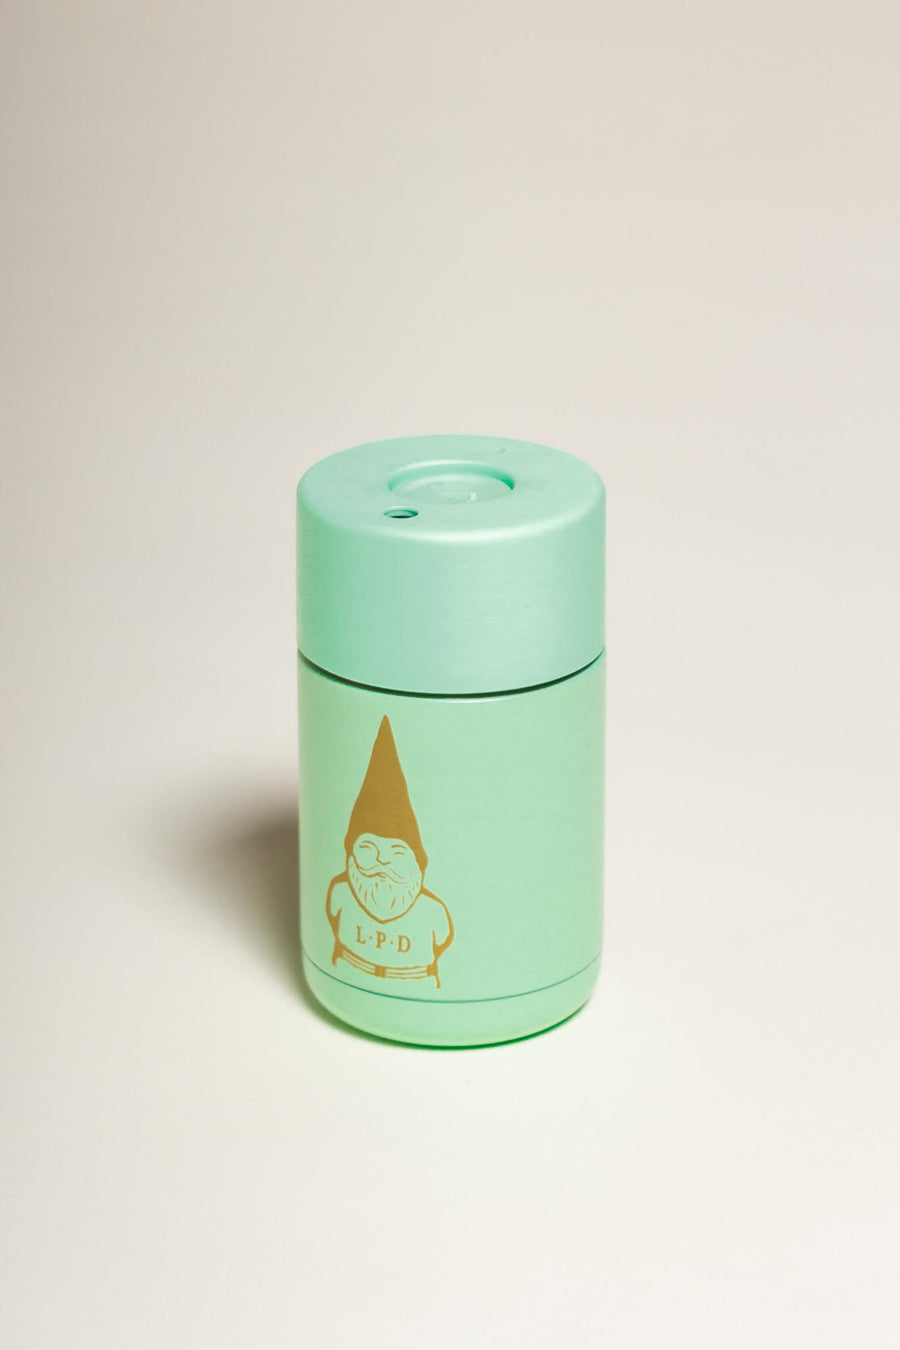 Reusable ceramic cup Le Petit Dep